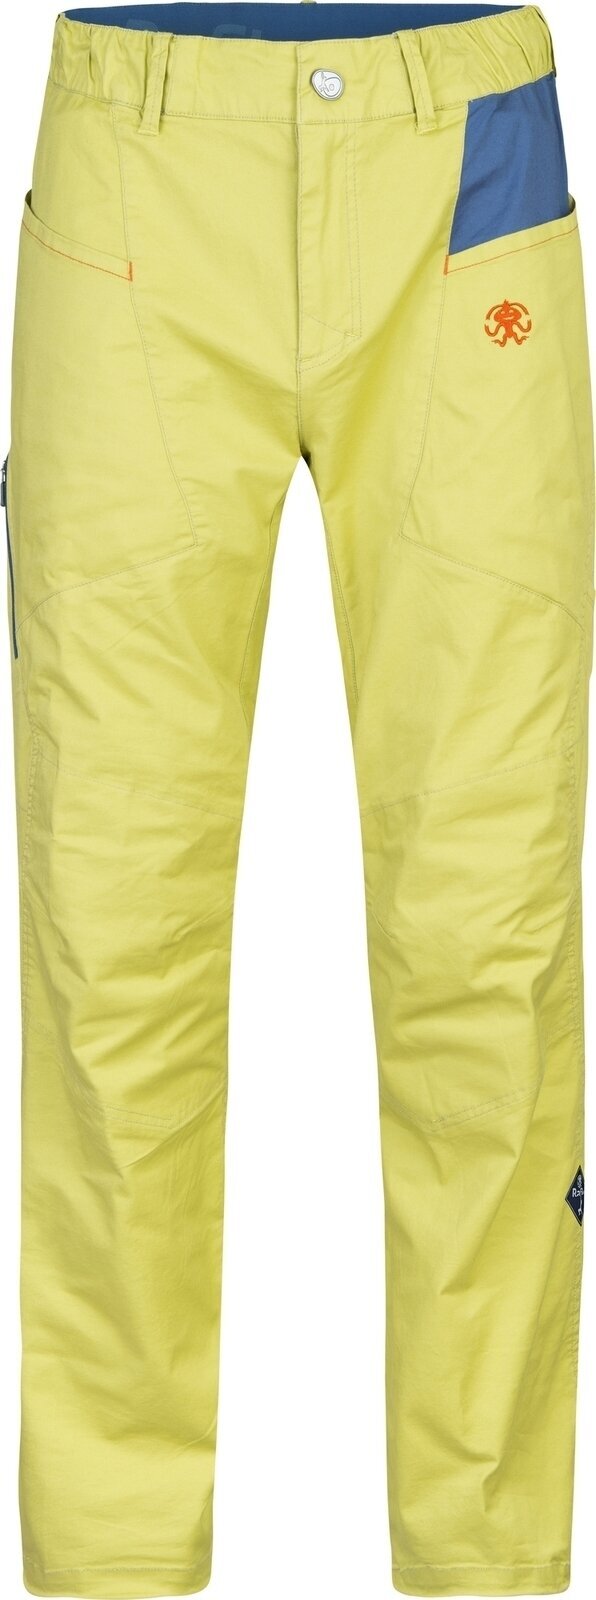 Outdoor Pants Rafiki Crag Man Pants Cress Green/Ensign M Outdoor Pants